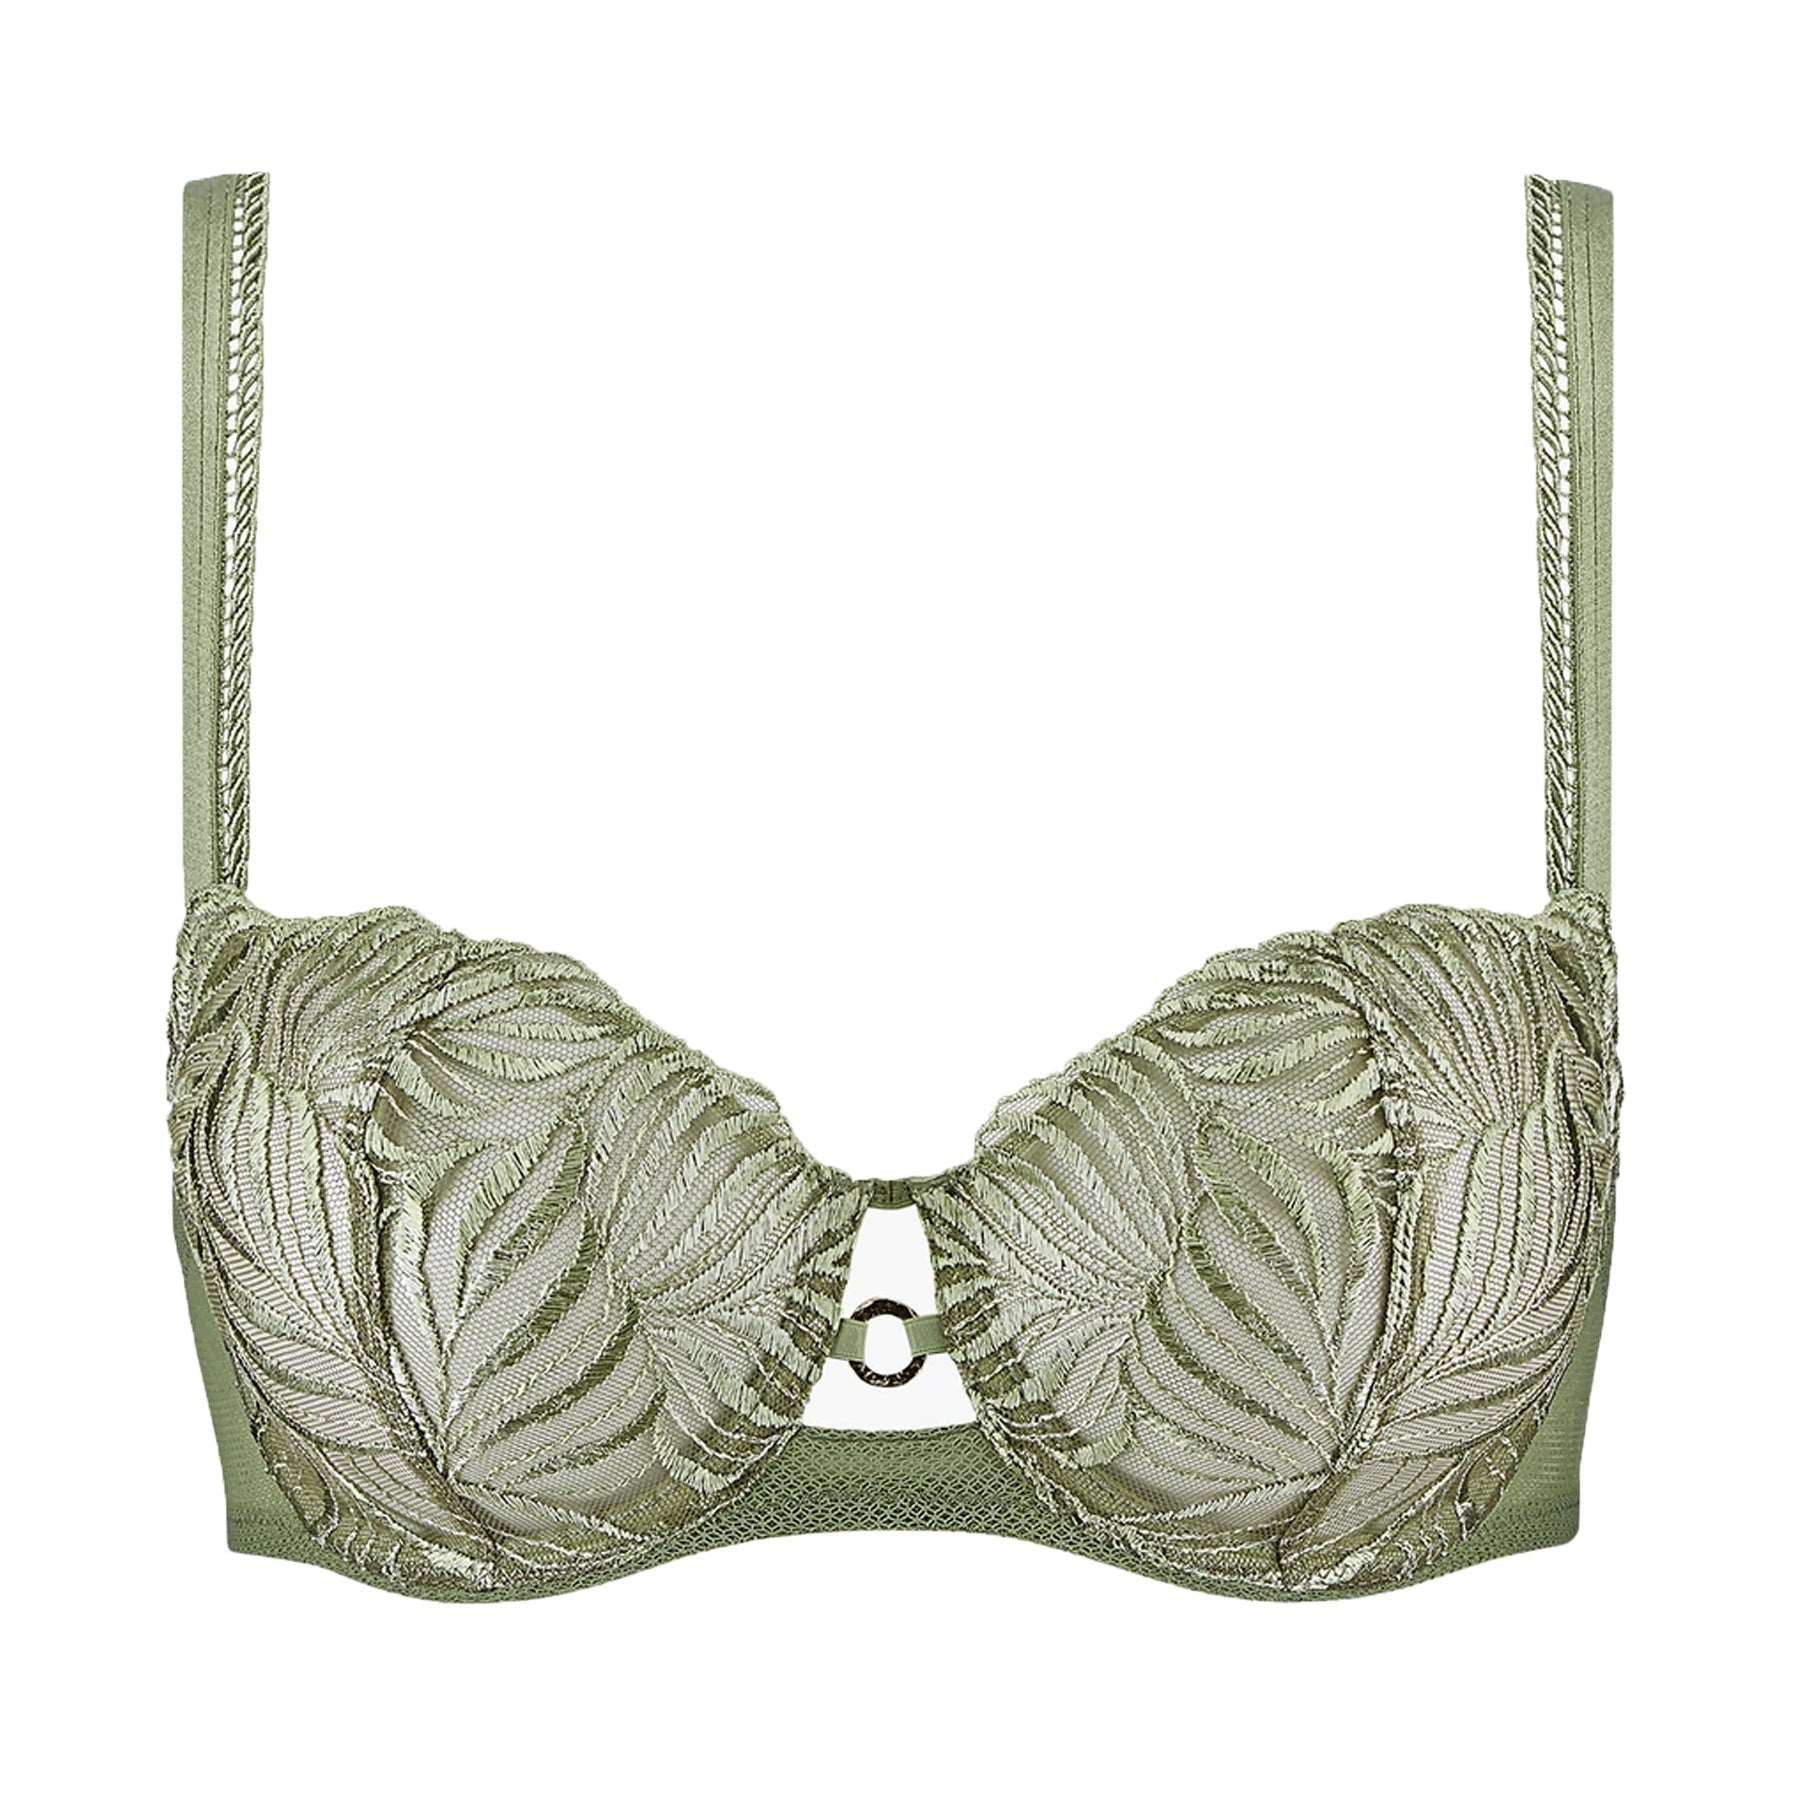 Buy Green Lingerie Sets for Women by MakClan Online